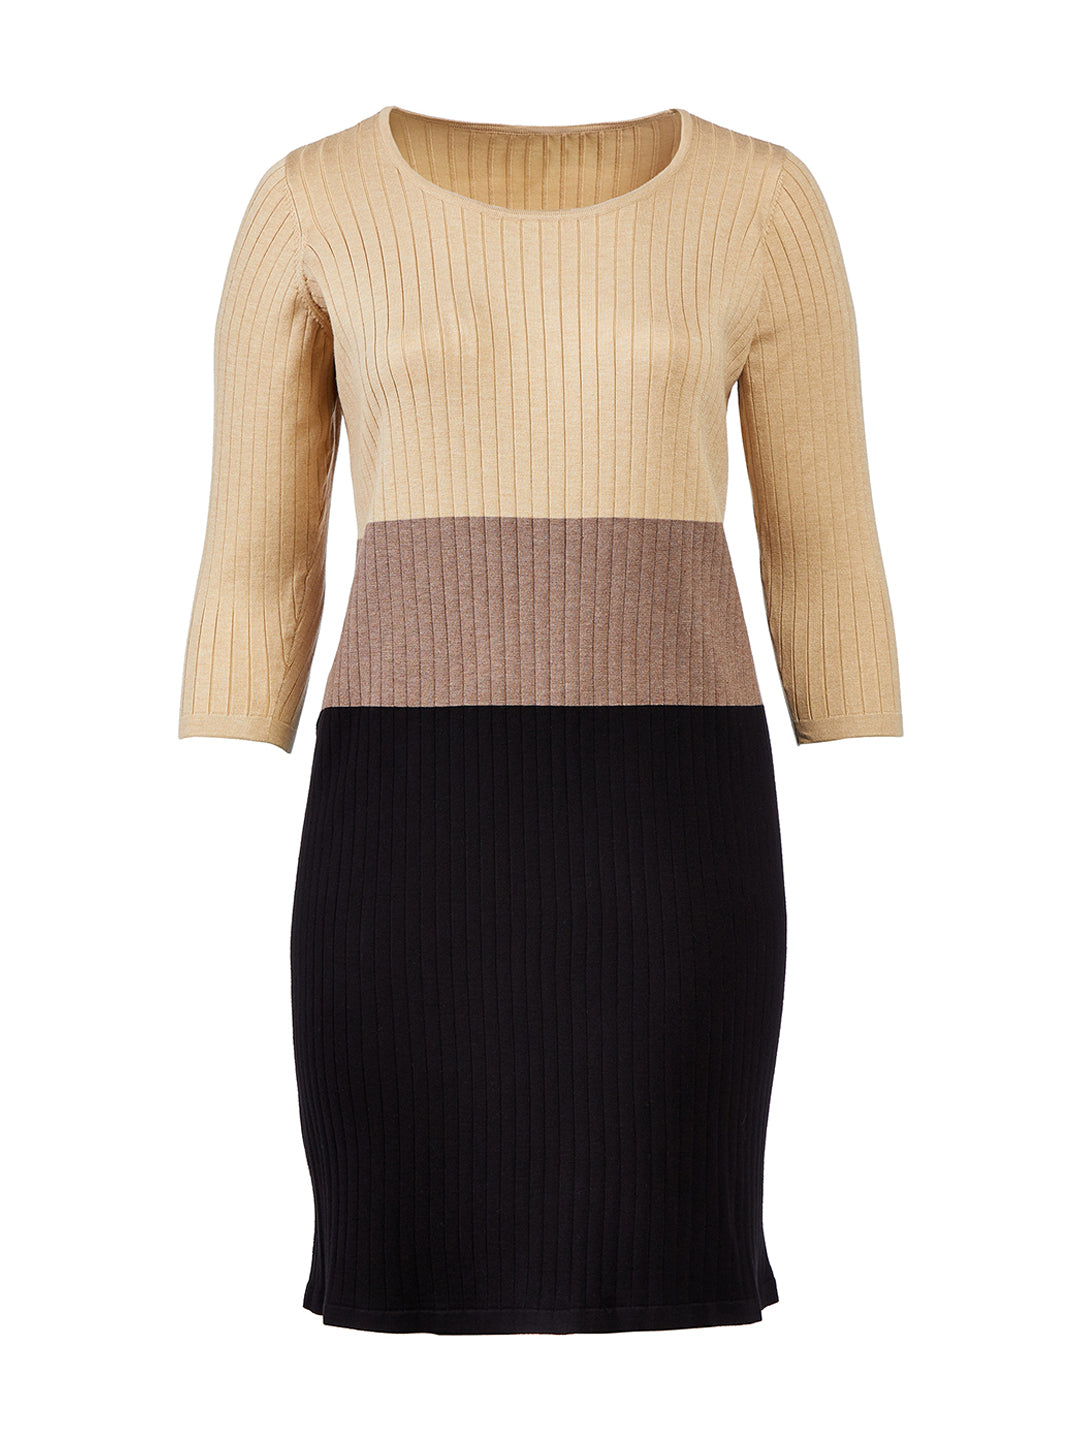 Color Block Sweater Dress | Calvin Klein | Gwynnie Bee Rental Subscription